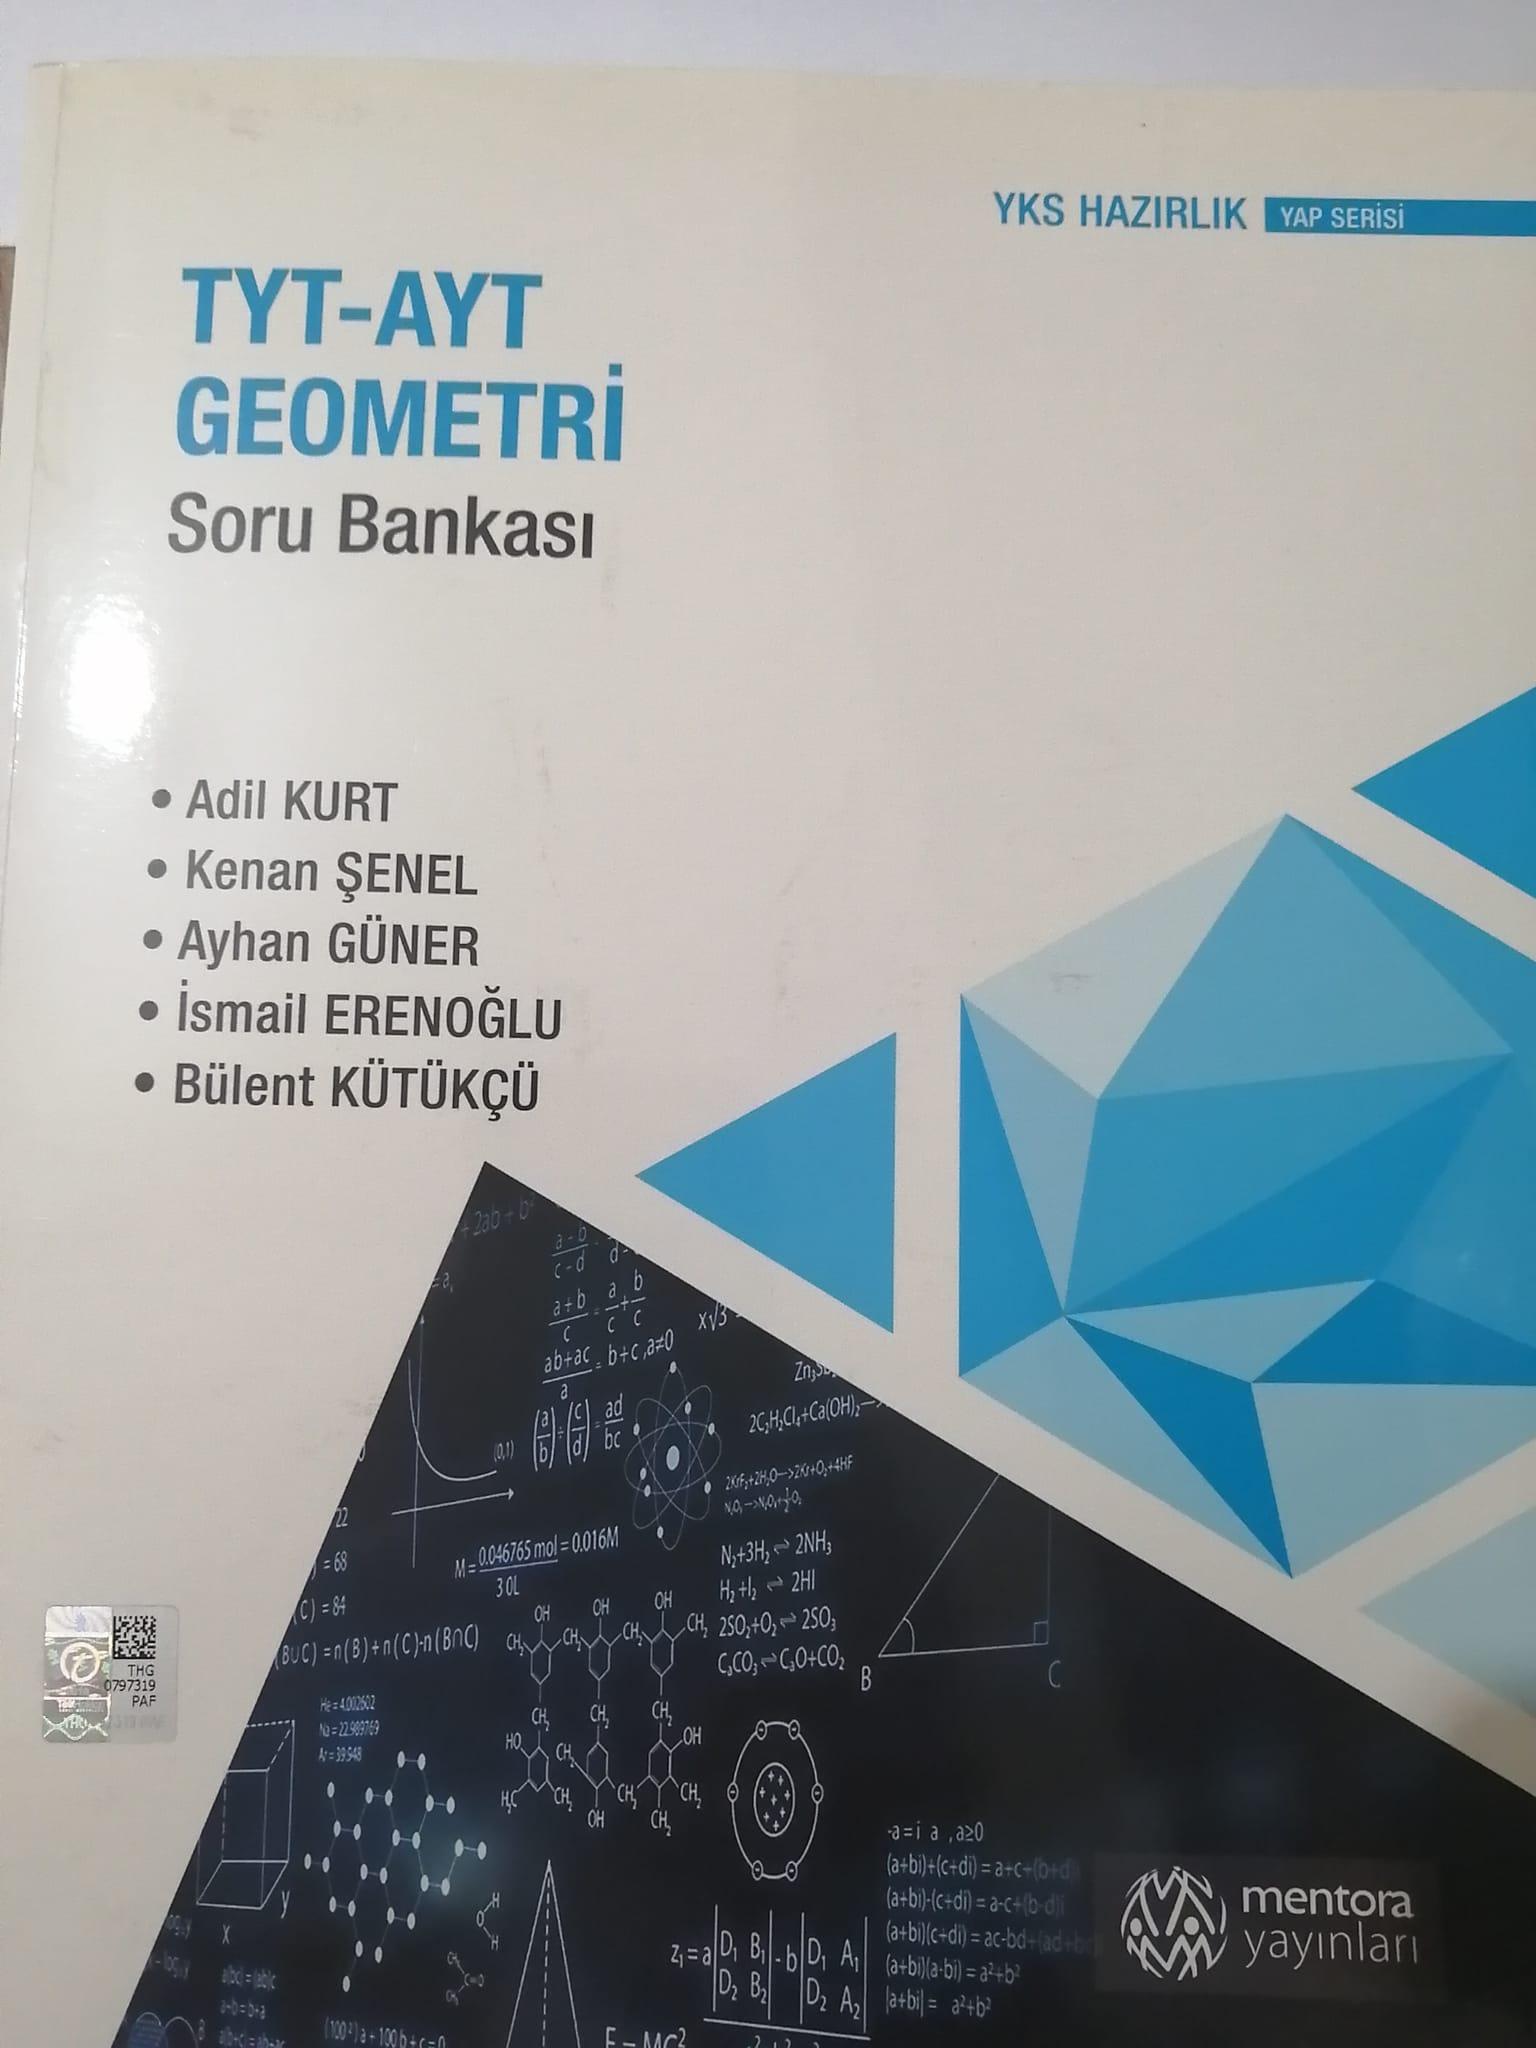 Tyt-ayt geometri soru bankası